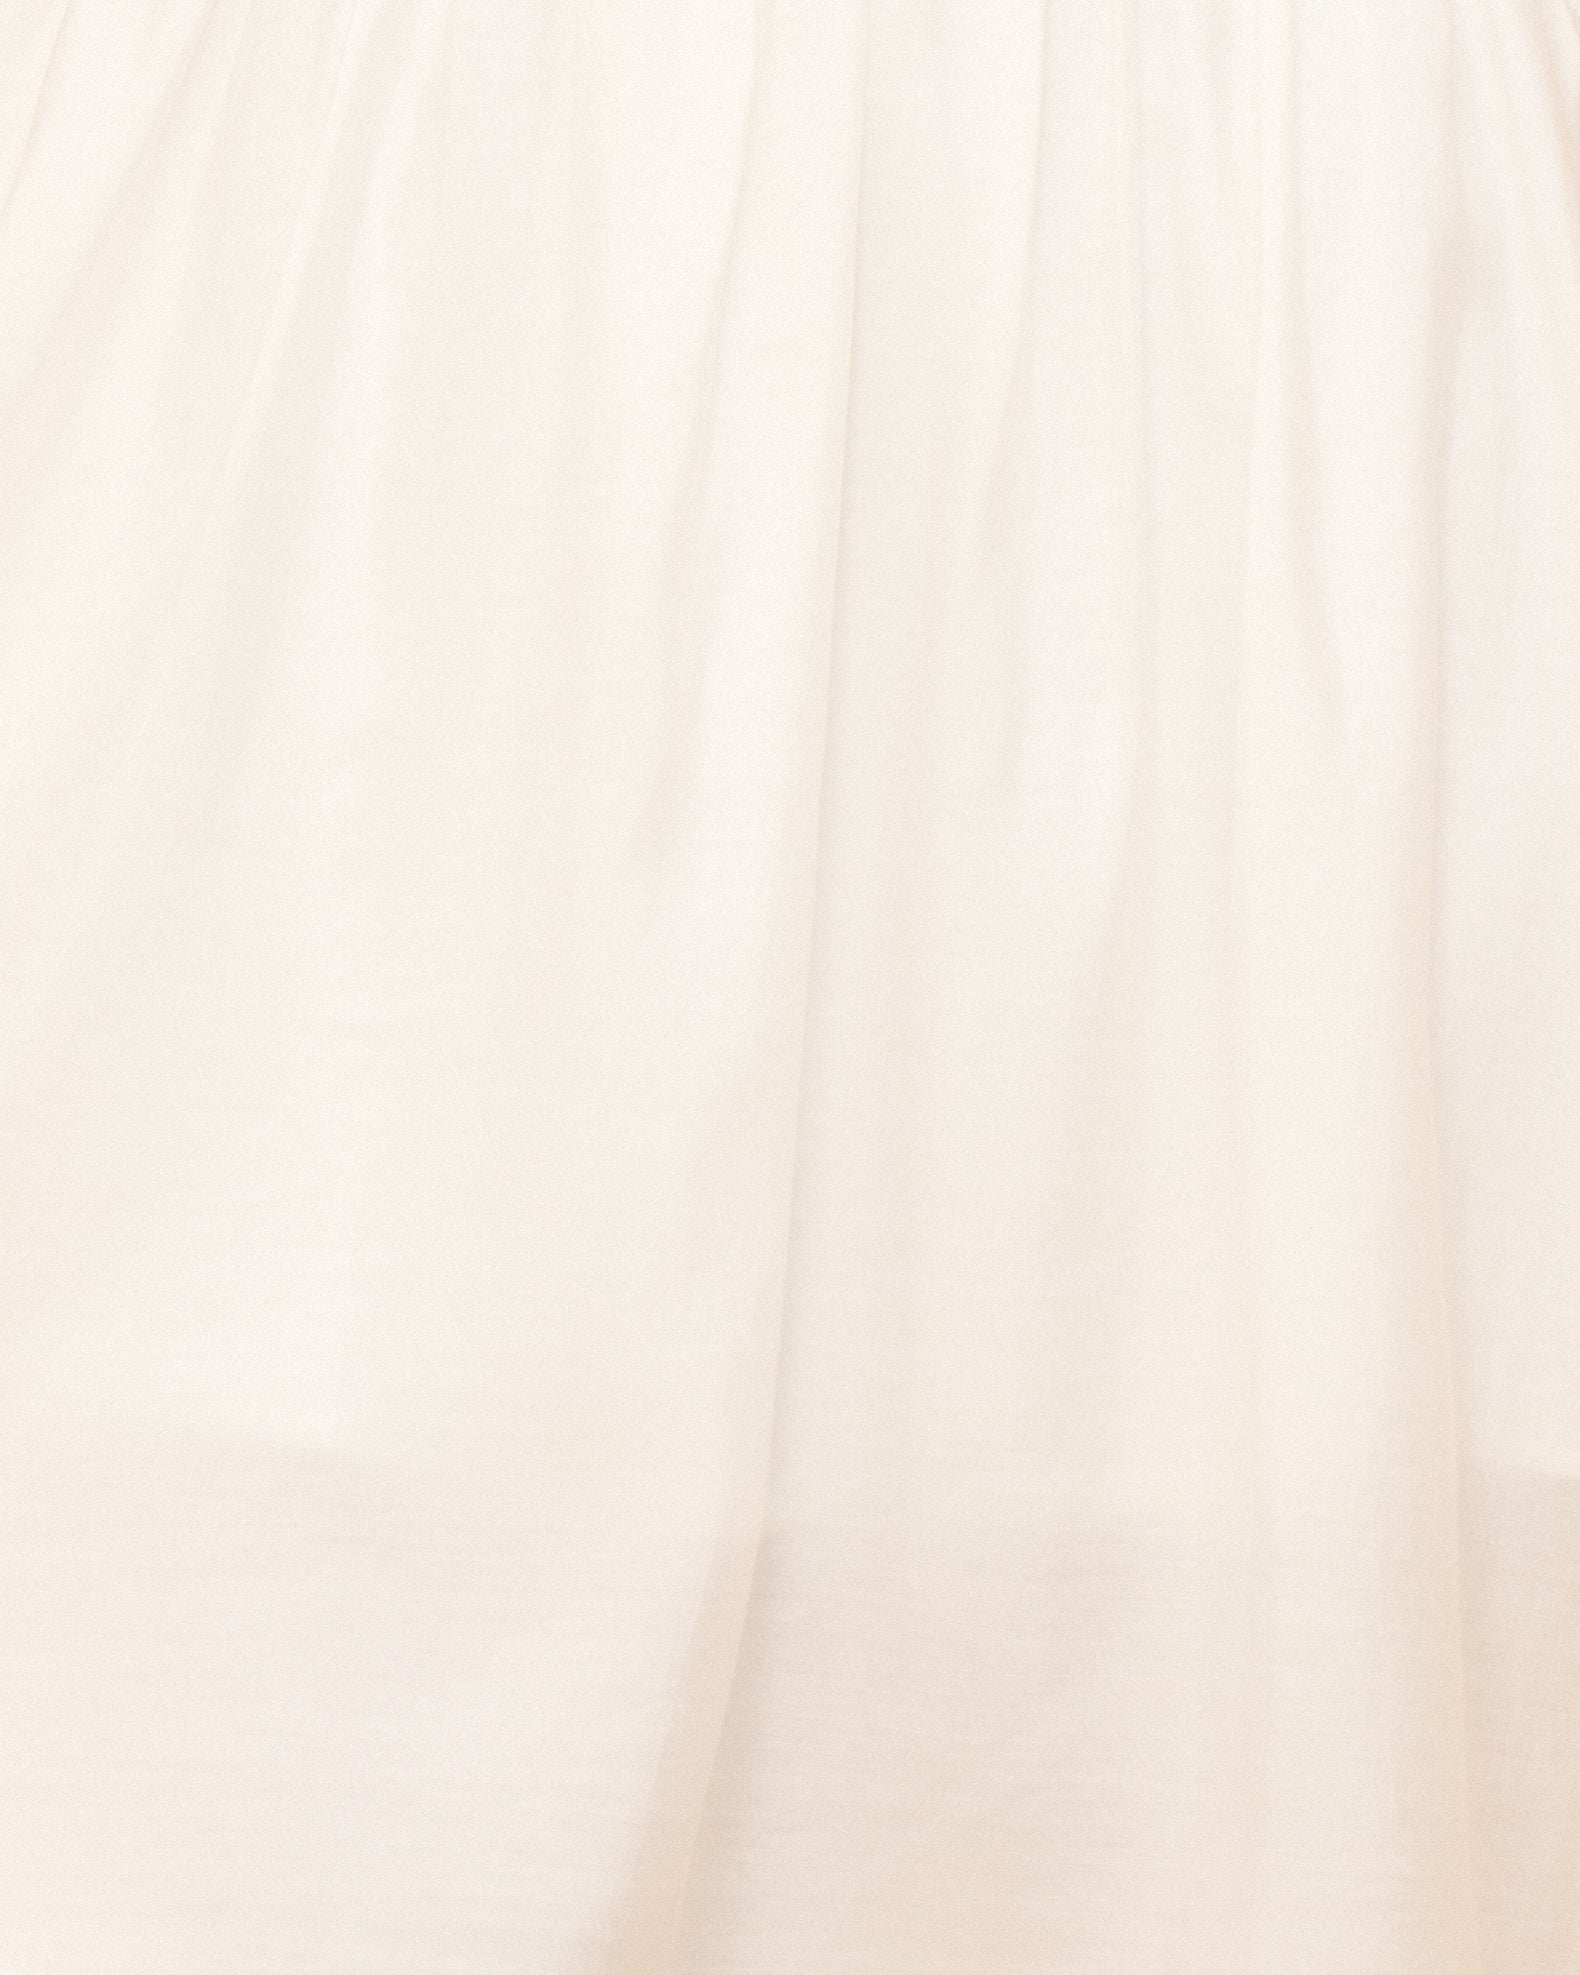 Valentine White Puff Sleeve Mini Dress